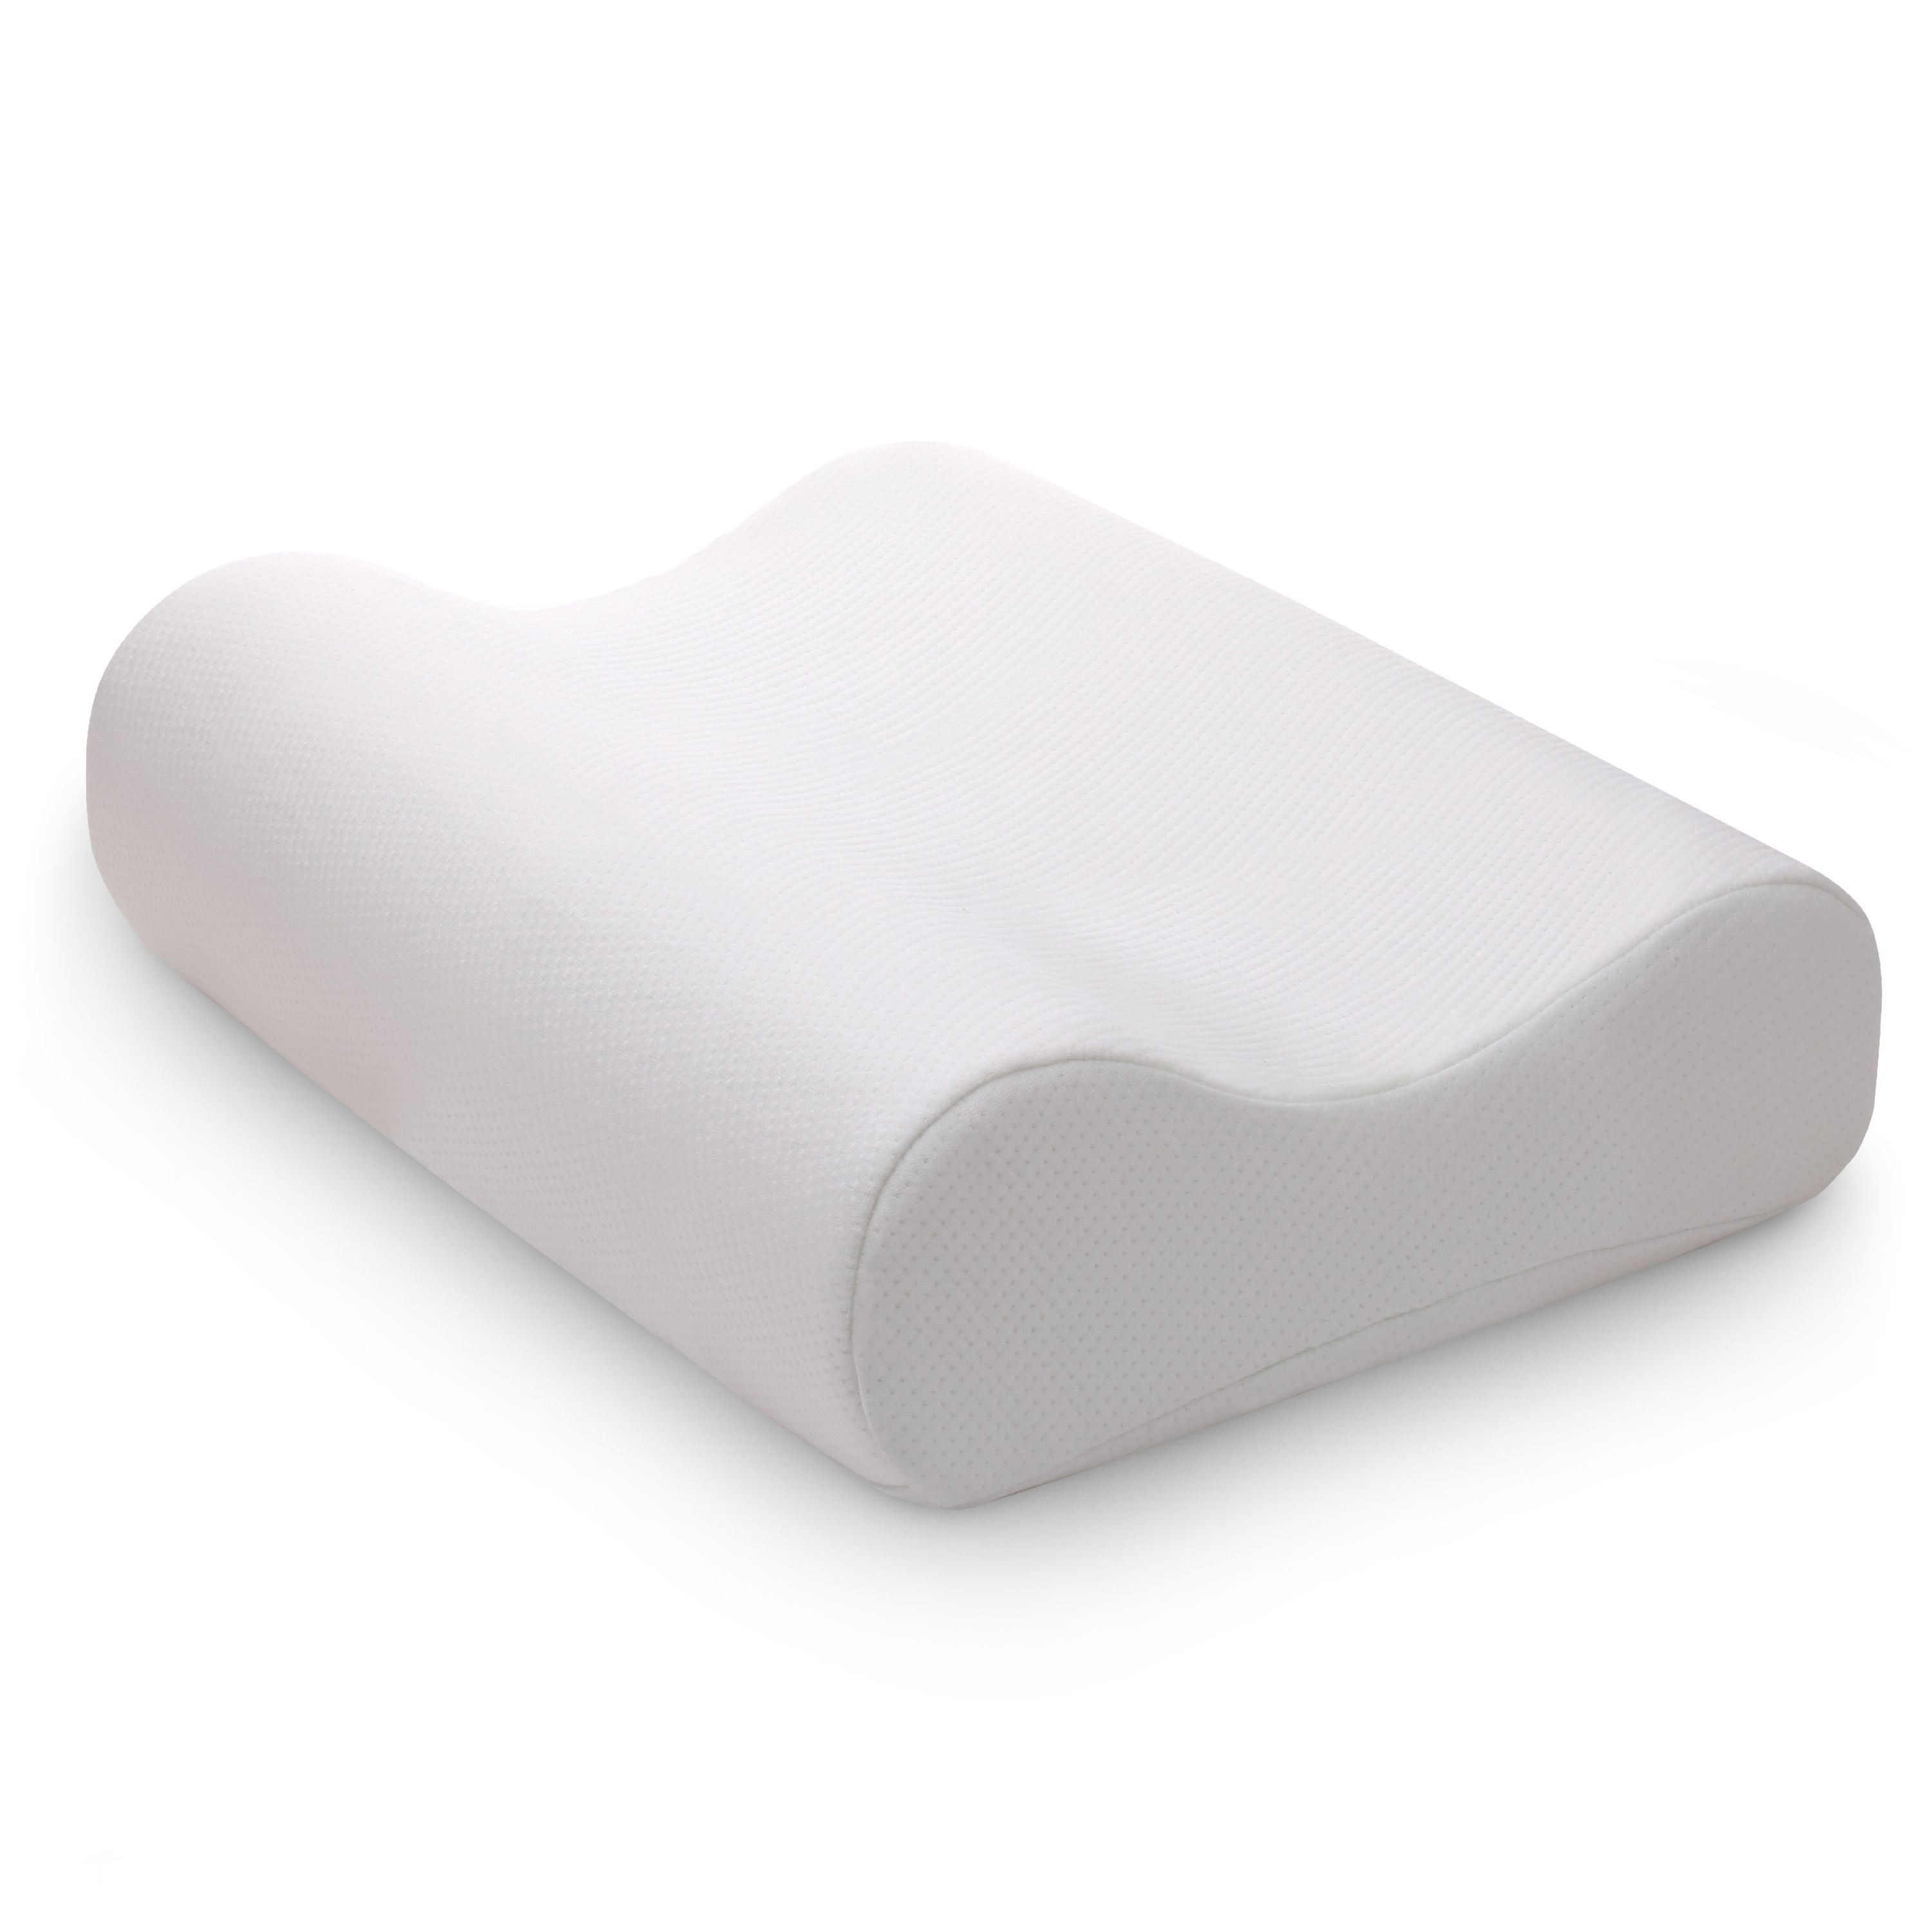 Details about   NEW Nesaila Cervical Contour Memory Foam Orthopedic Pillow for Neck Pain E 04 